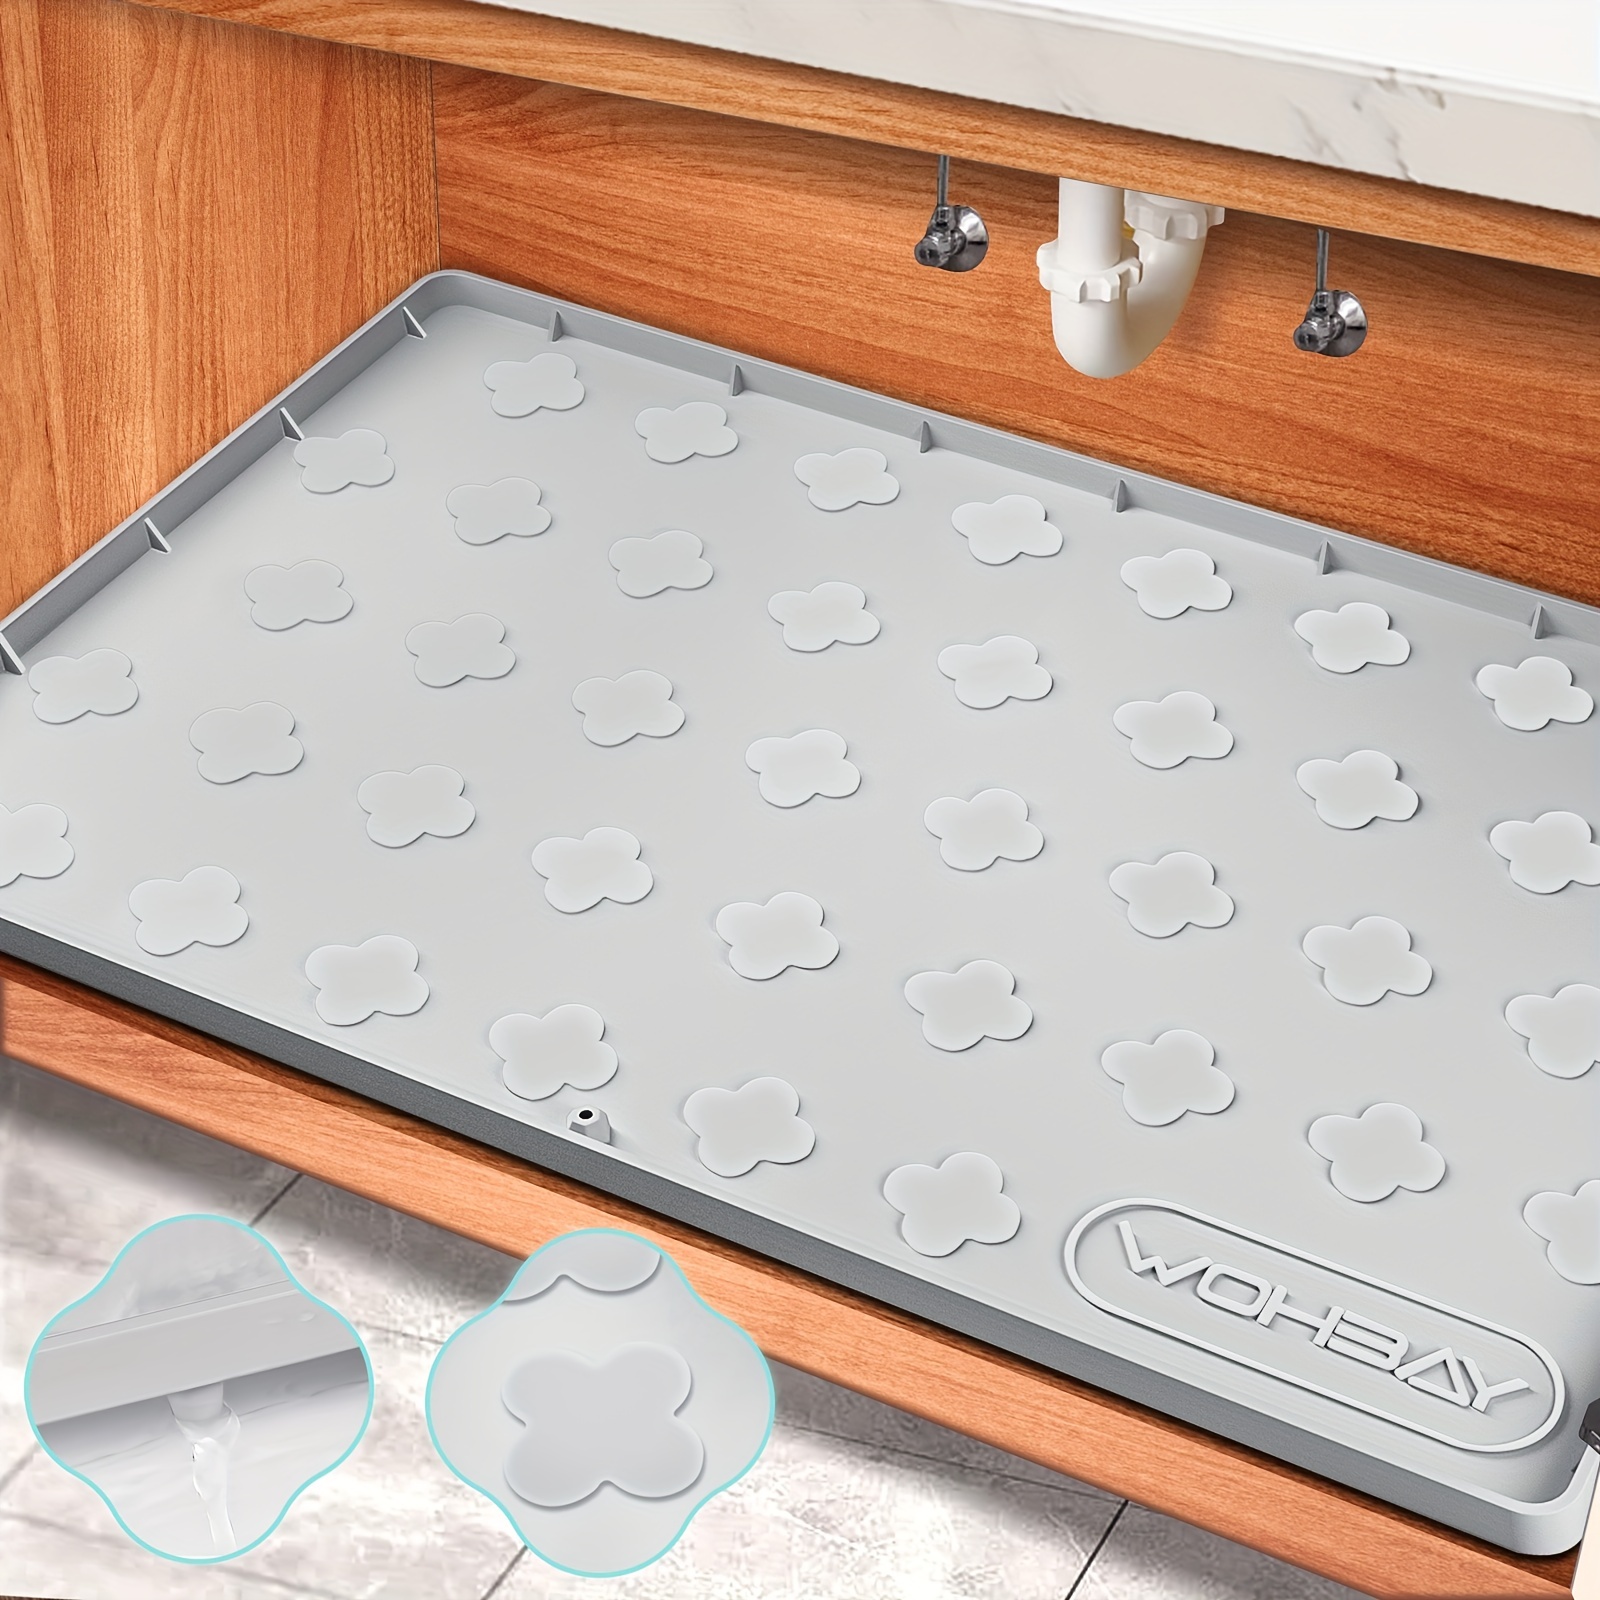  Xtreme Mats - Waterproof Under Sink Mat for Bathroom Vanity  Cabinets, (Gray, 25 1/4 x 19 1/4) - Bathroom Cabinet Shelf Protector,  Flexible Under Bathroom Sink Drip Tray Liner